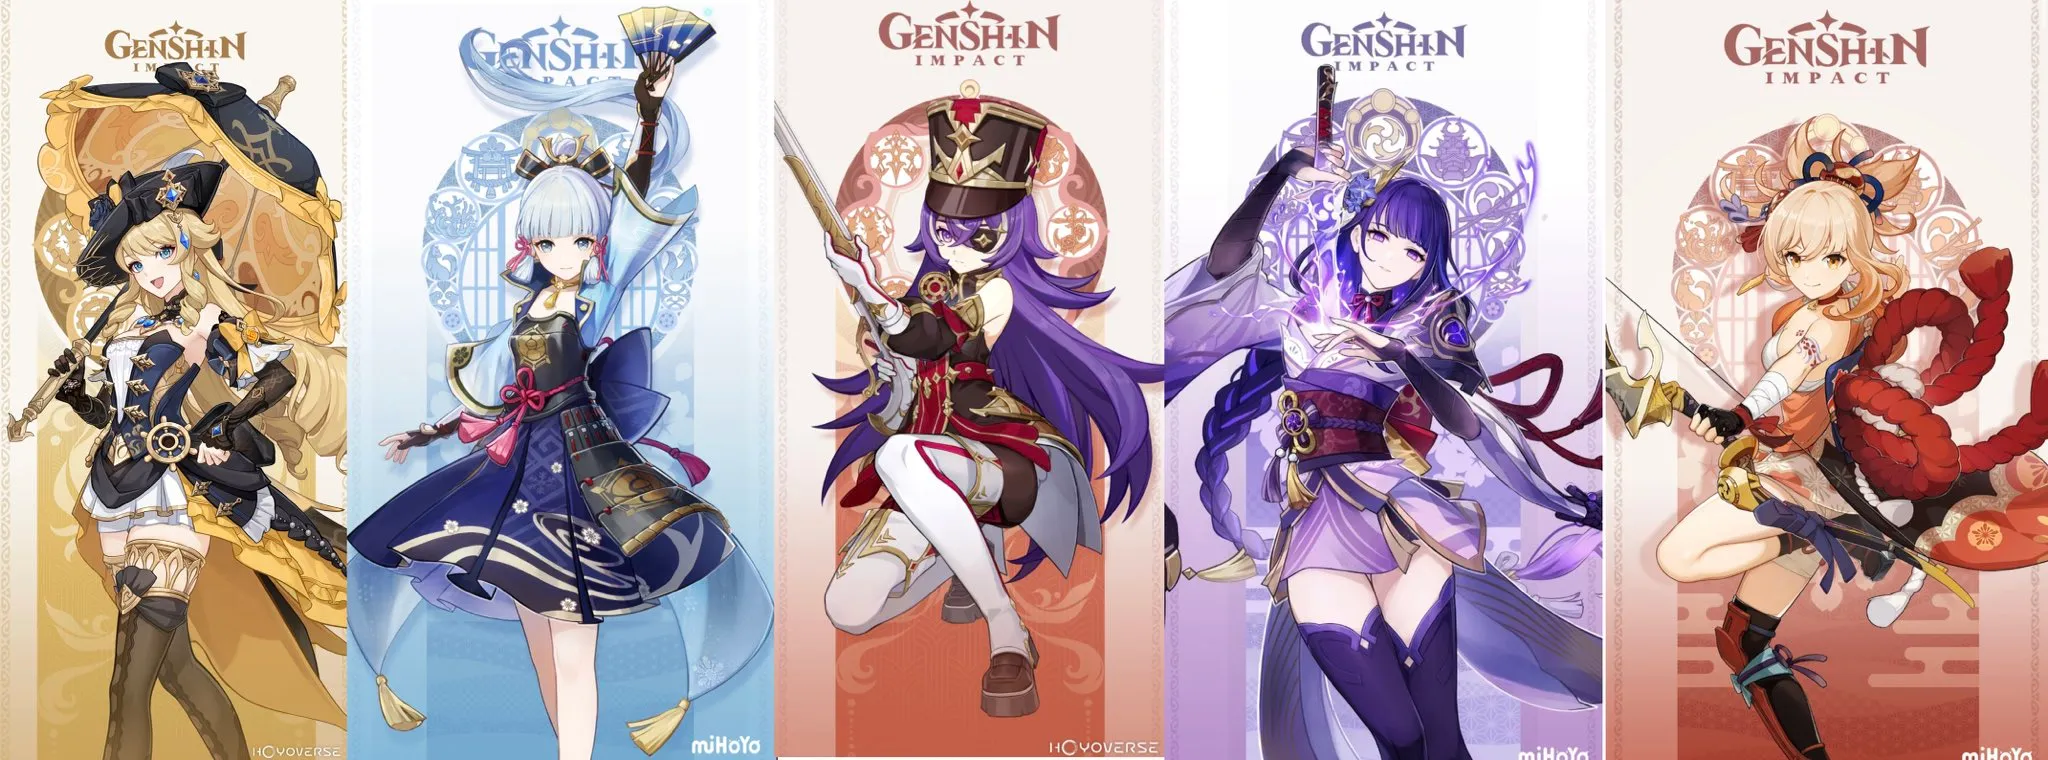 Genshin Impact 4.3 characters: Navia, Chevreuse, and rerun leaks